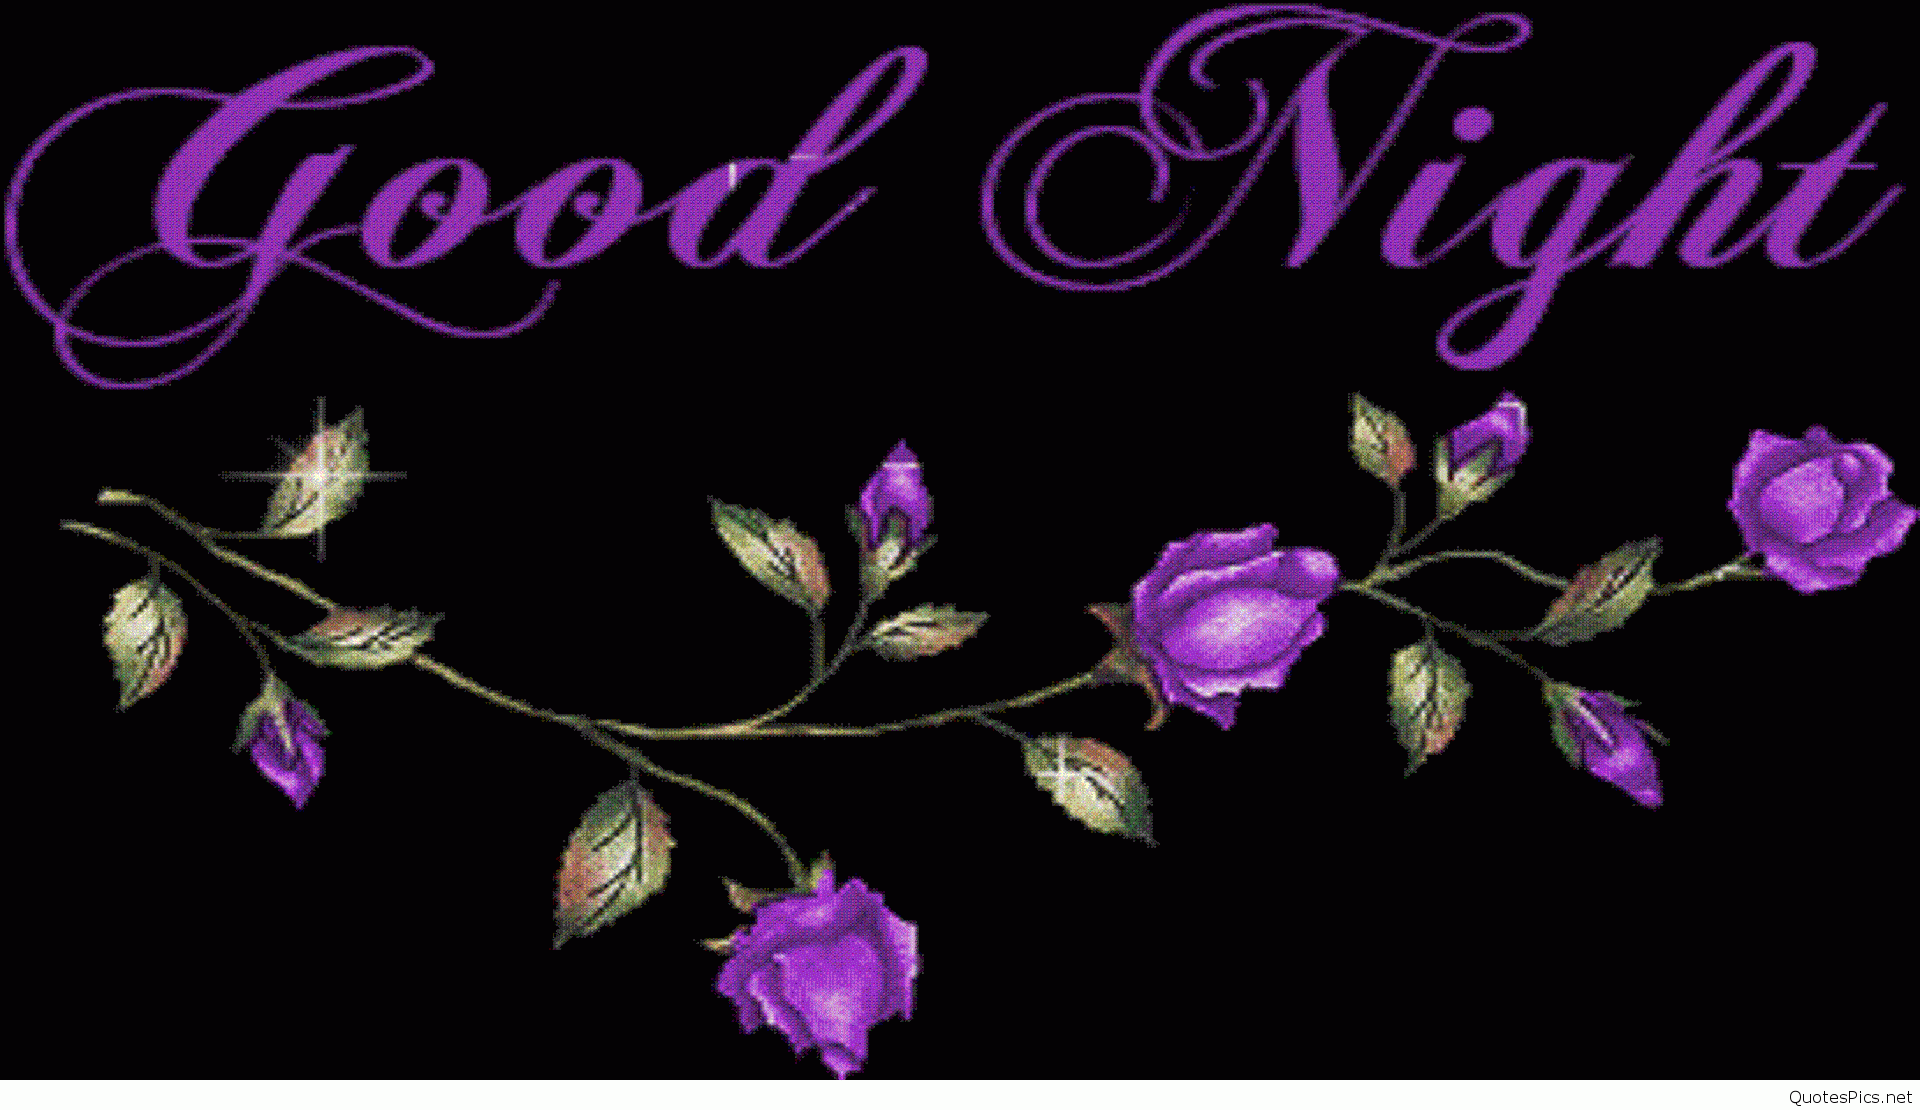 Good night & sweet dreams cards, photo pics hd